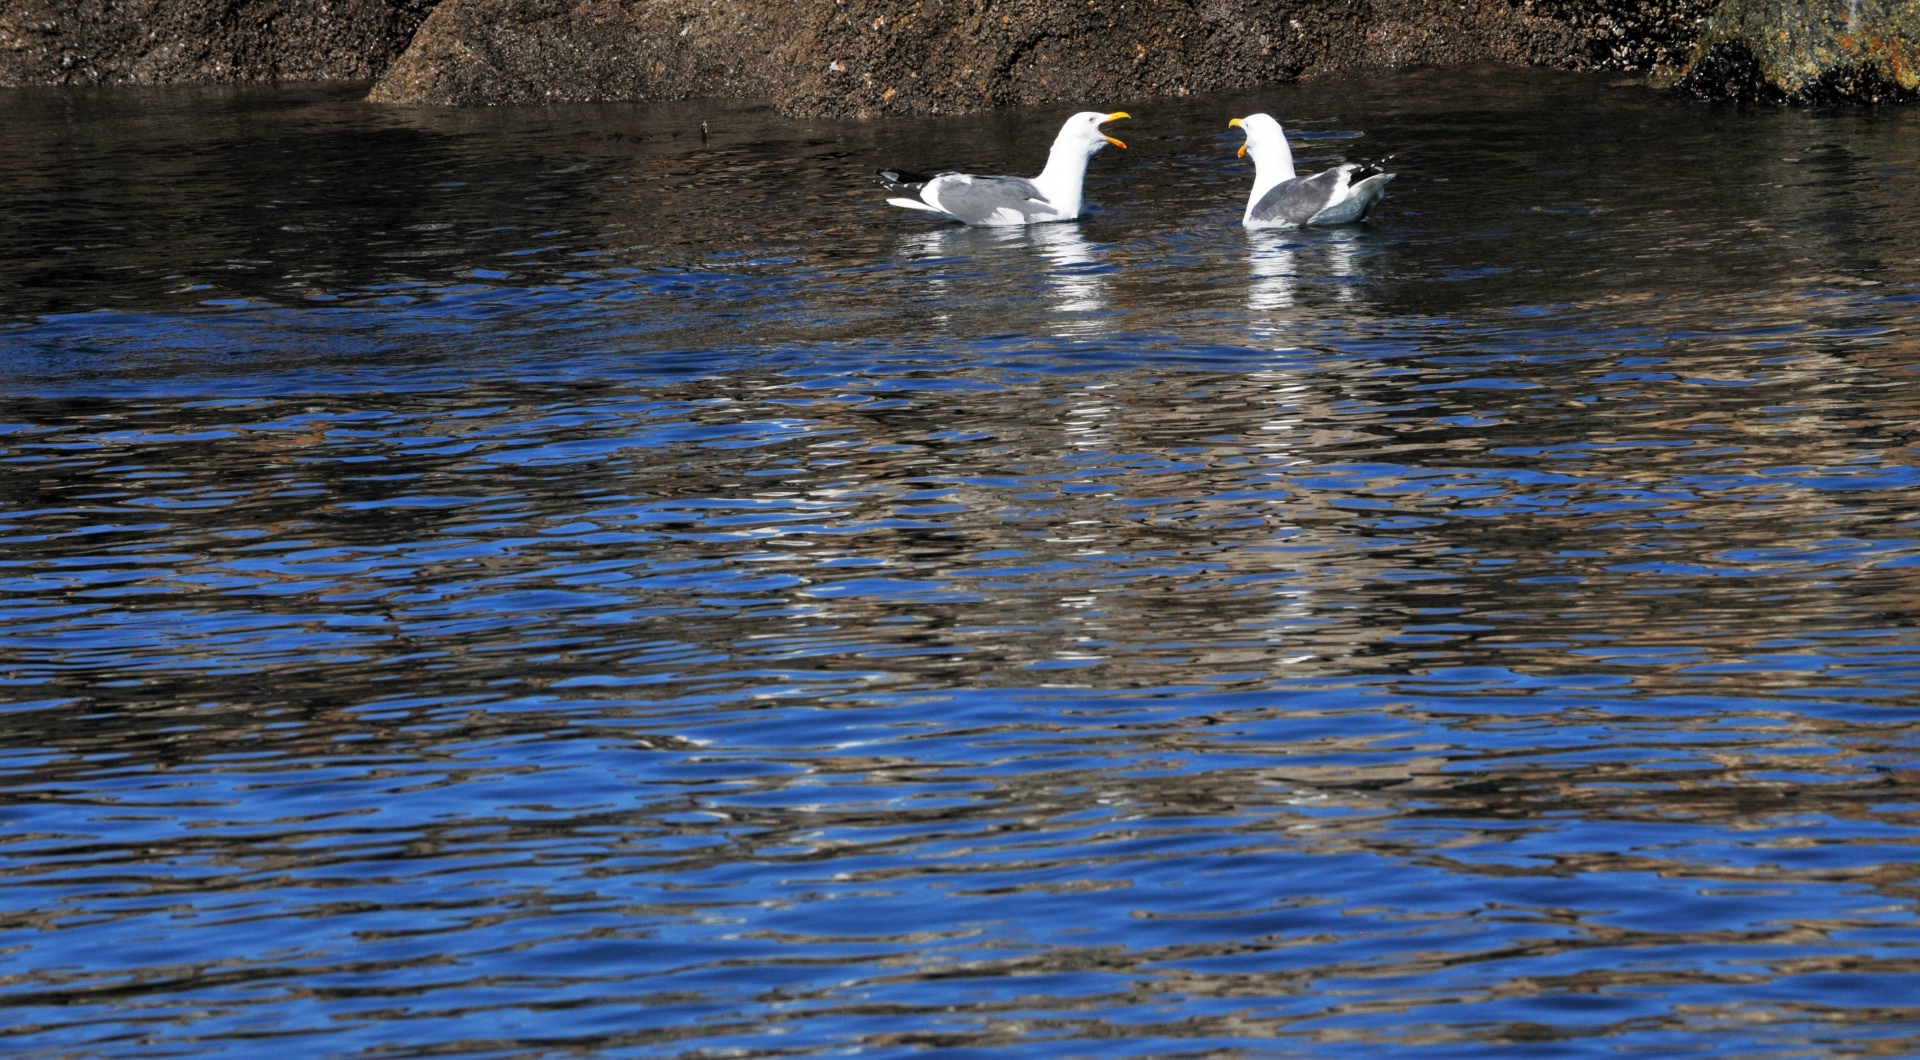 Squawking Seagulls